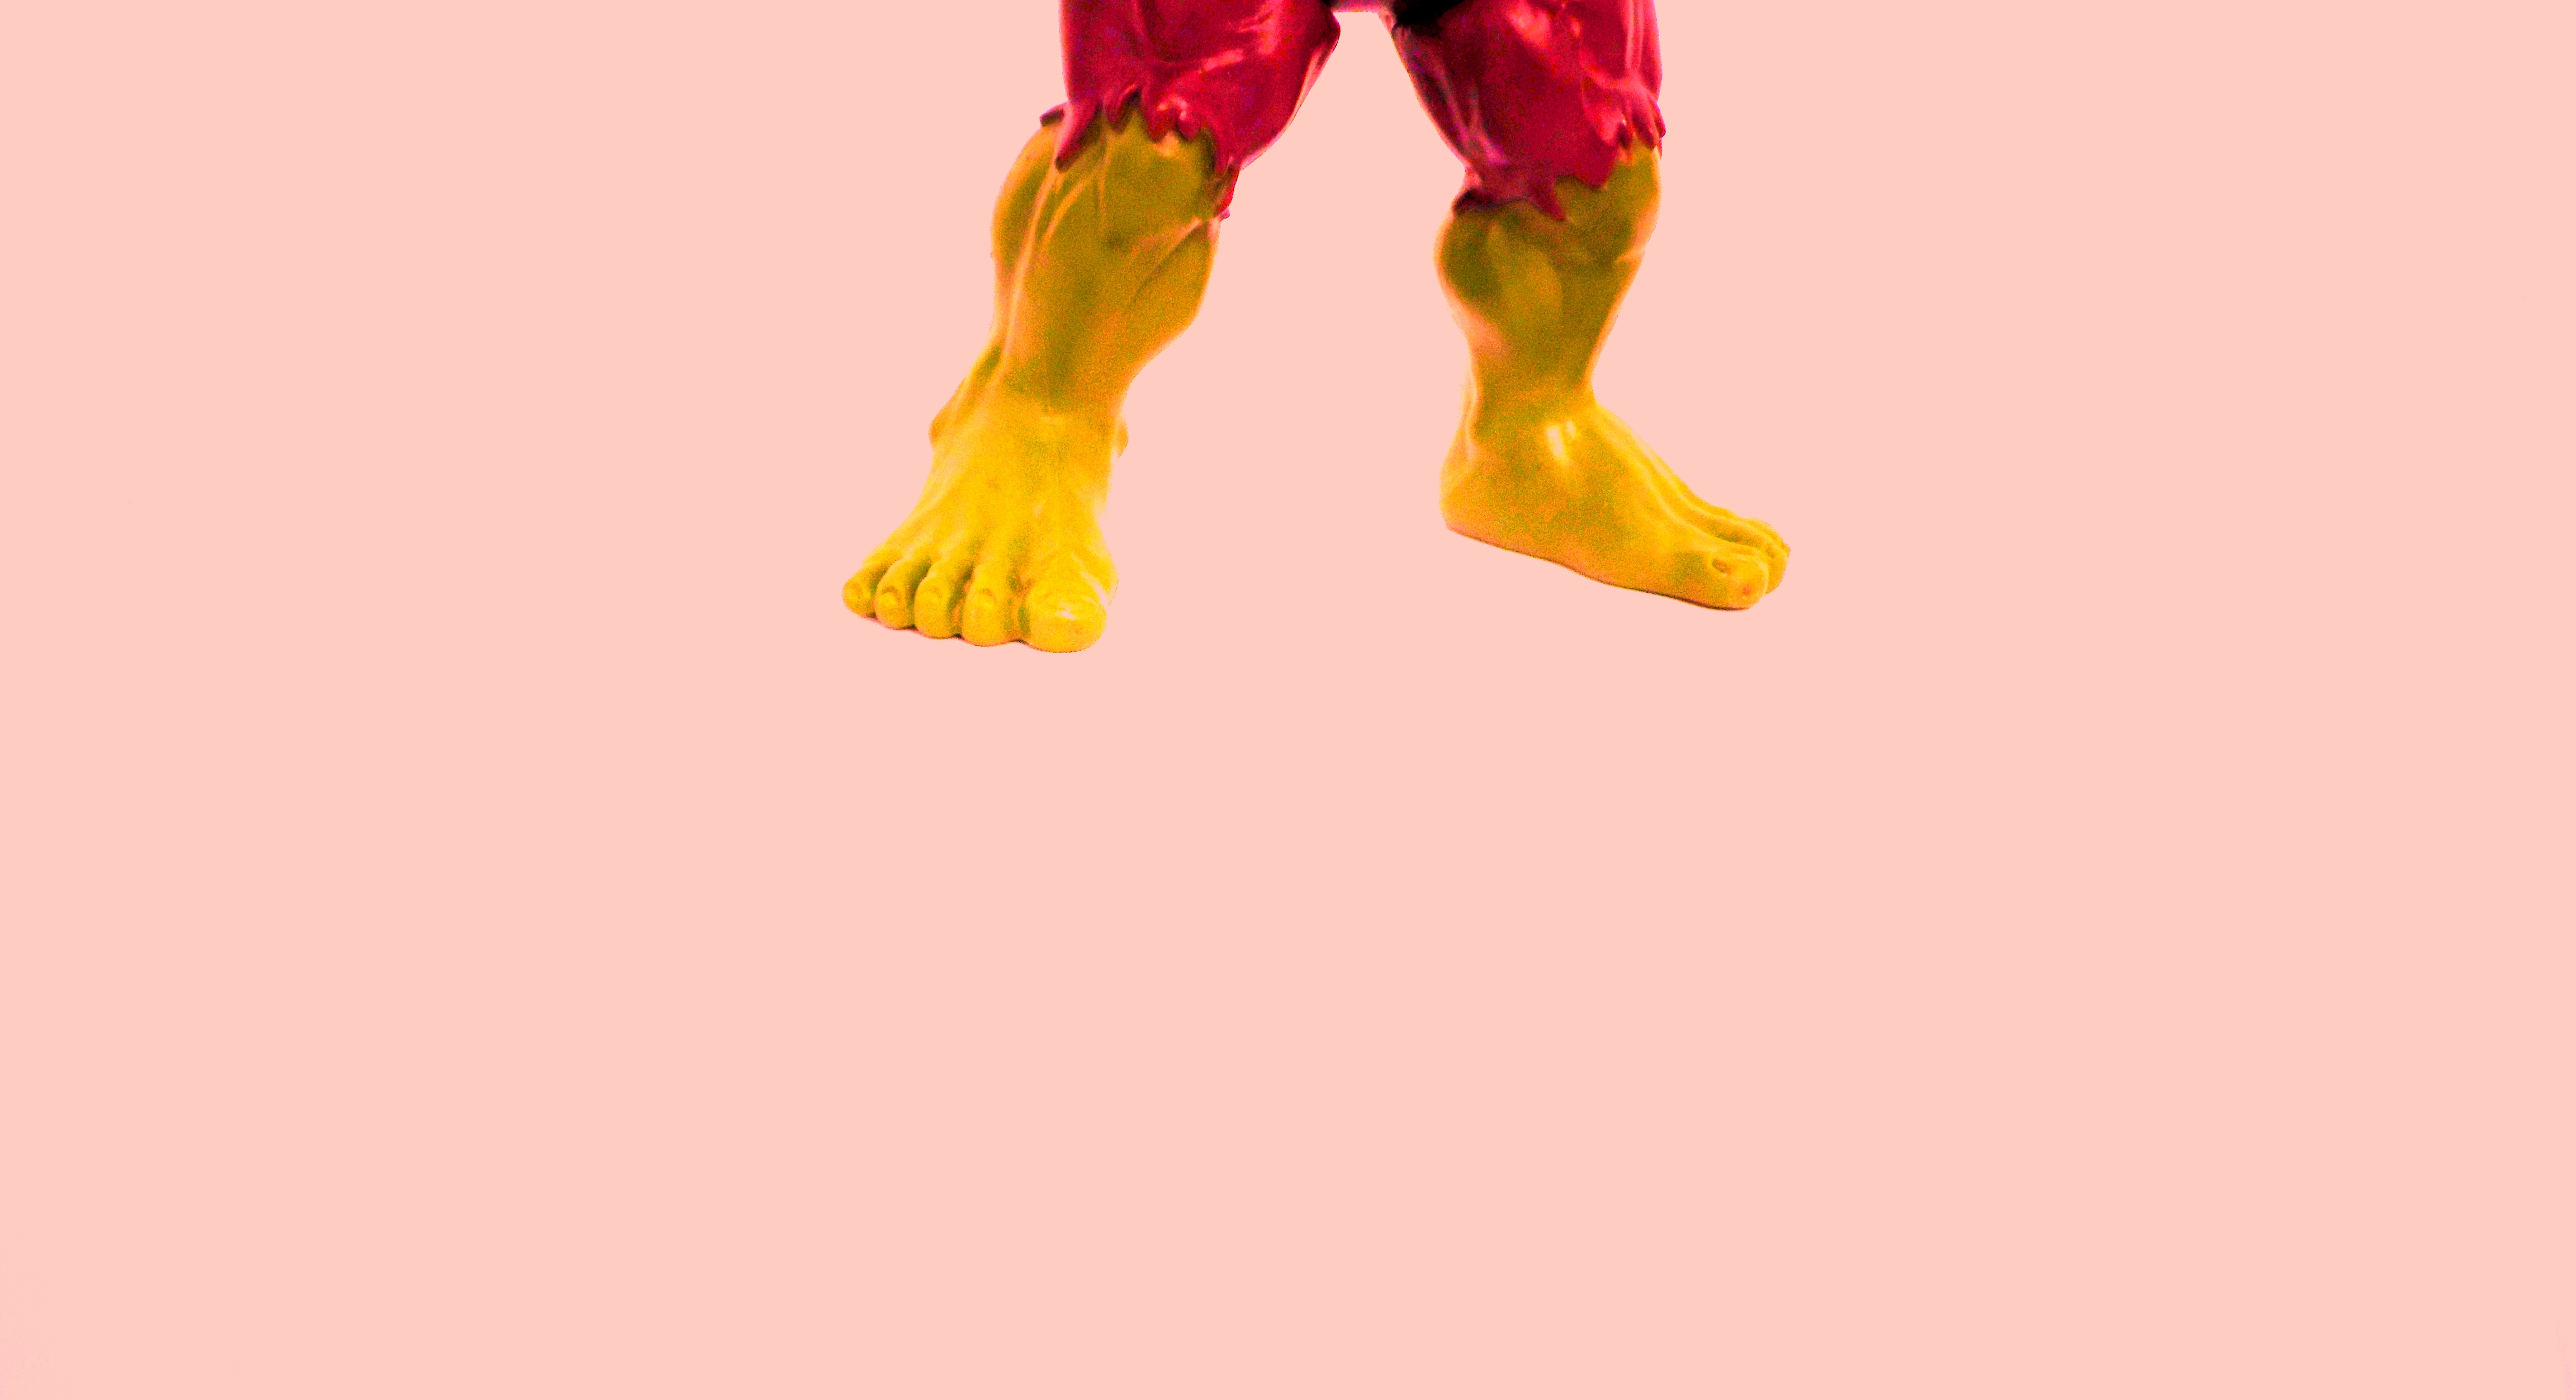 Hulk by Mike Navolta